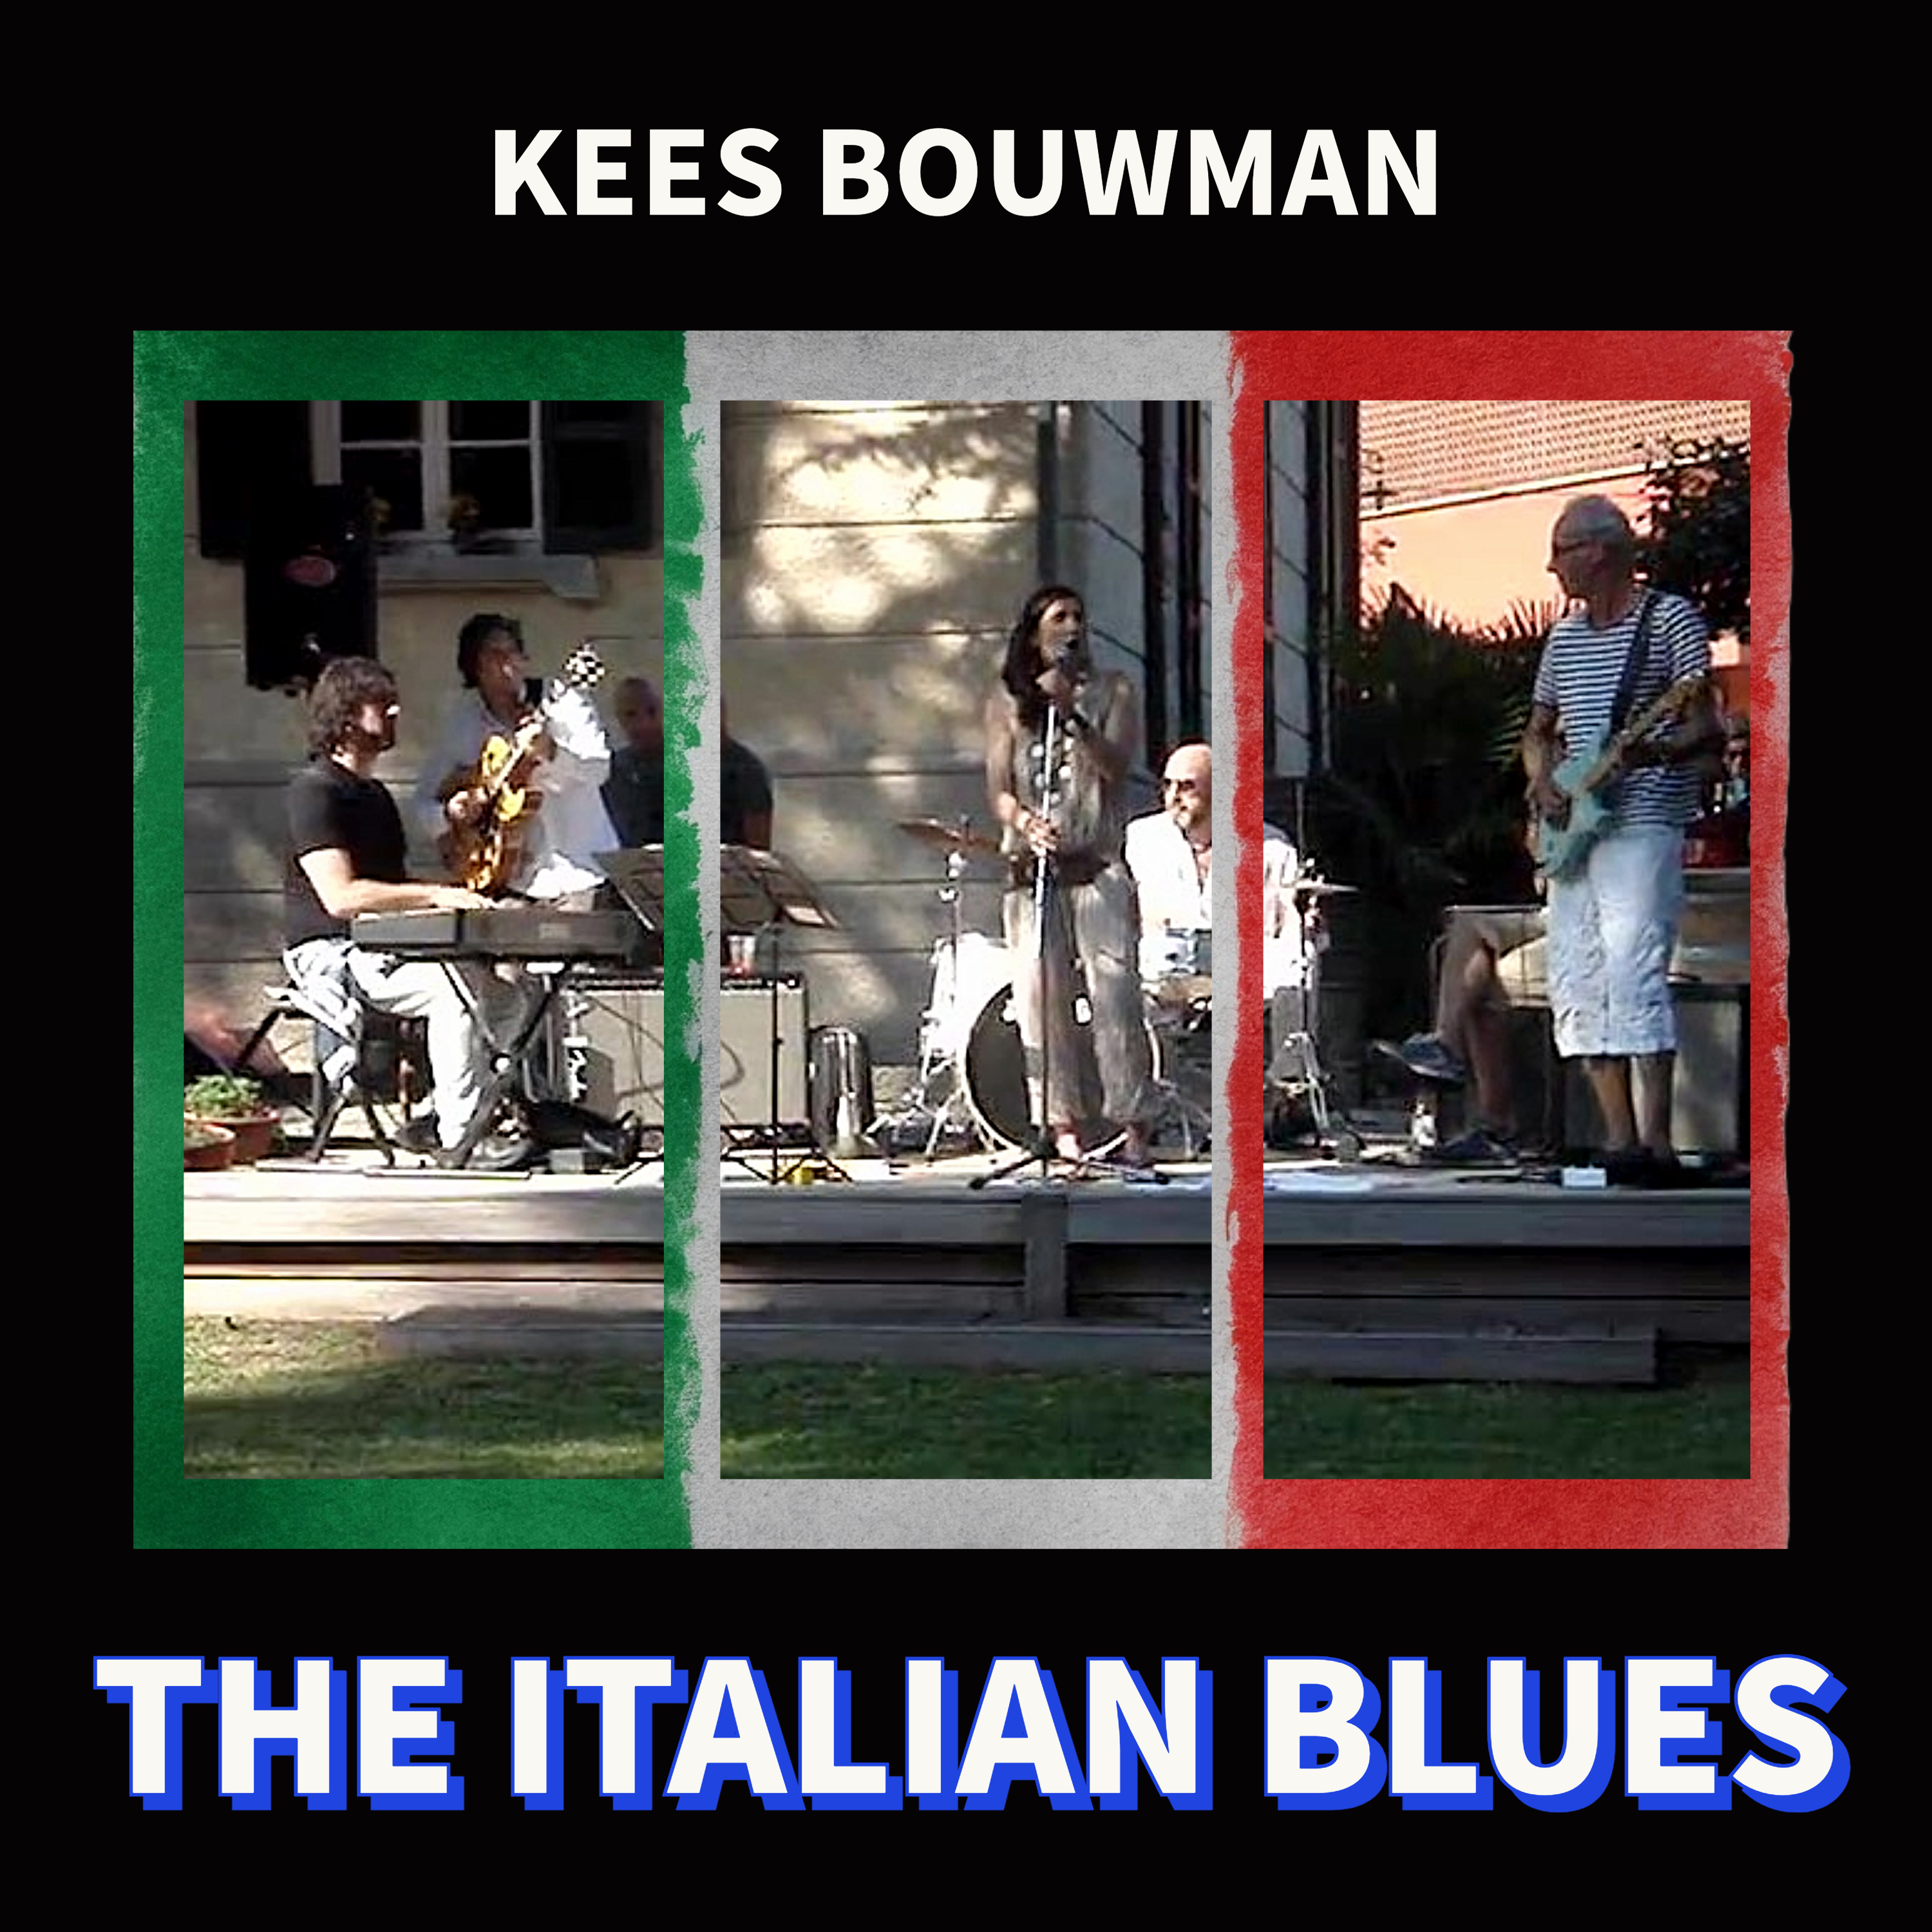 The Italian Blues